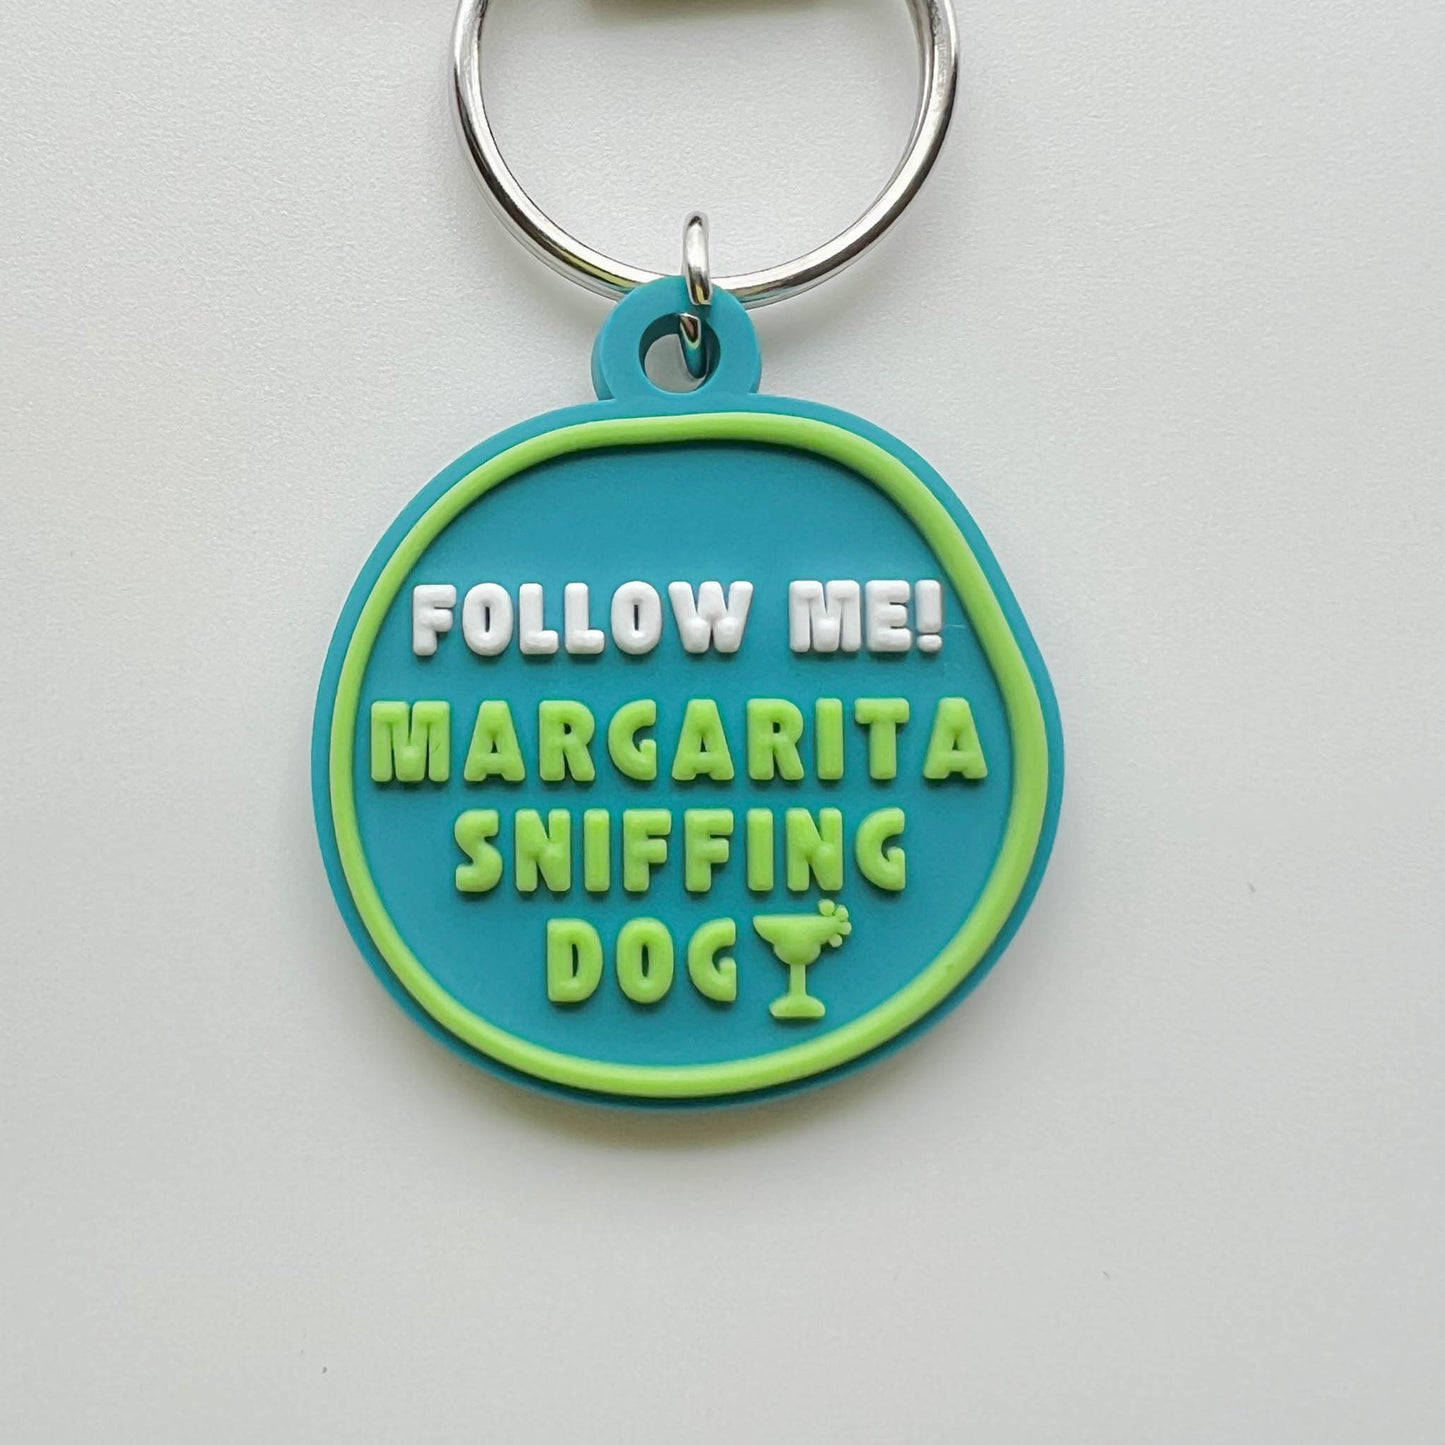 Follow Me! Margarita Sniffing Dog - Funny 3-D Dog Collar Charm